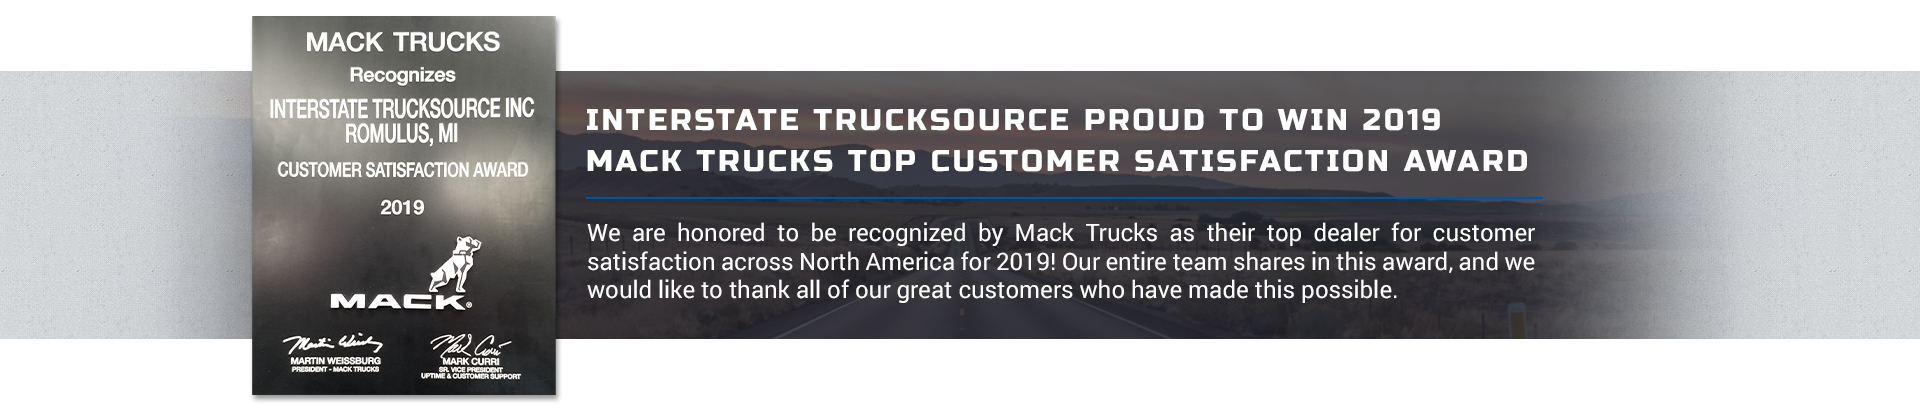 Interstate Trucksource proud to win 2019 Mac trucks Top Customer Satisfaction Award